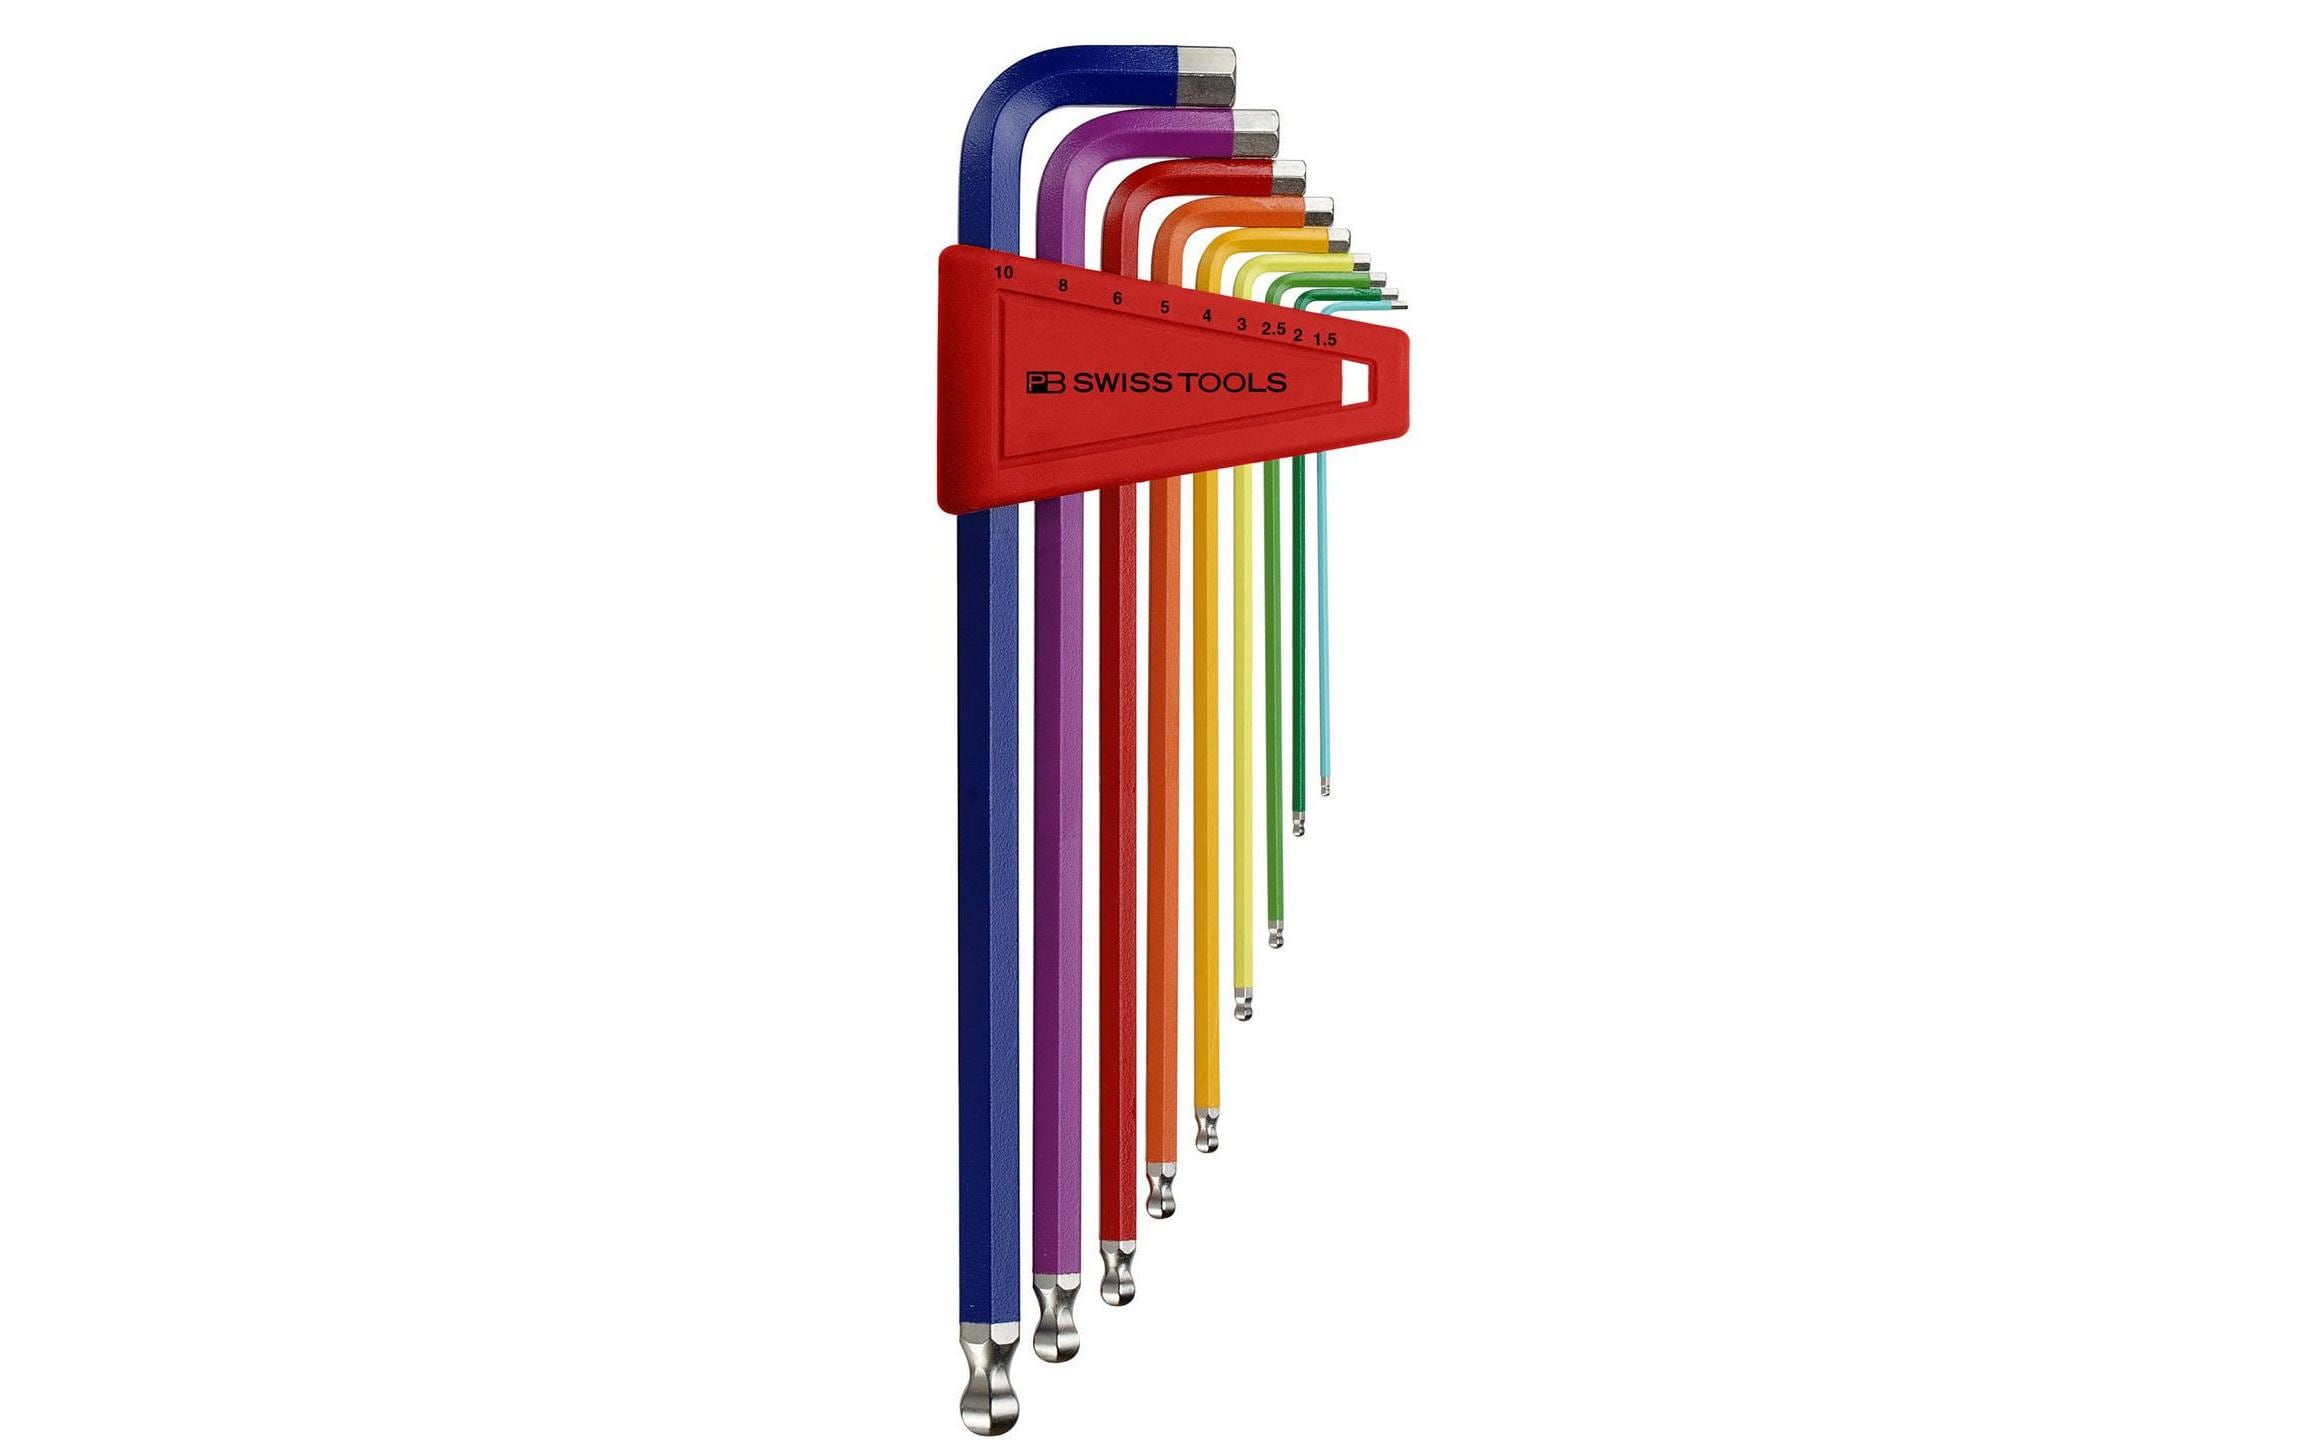 PB Swiss Tools Winkelschlüssel-Set 1.5-10 mm Innensechskant